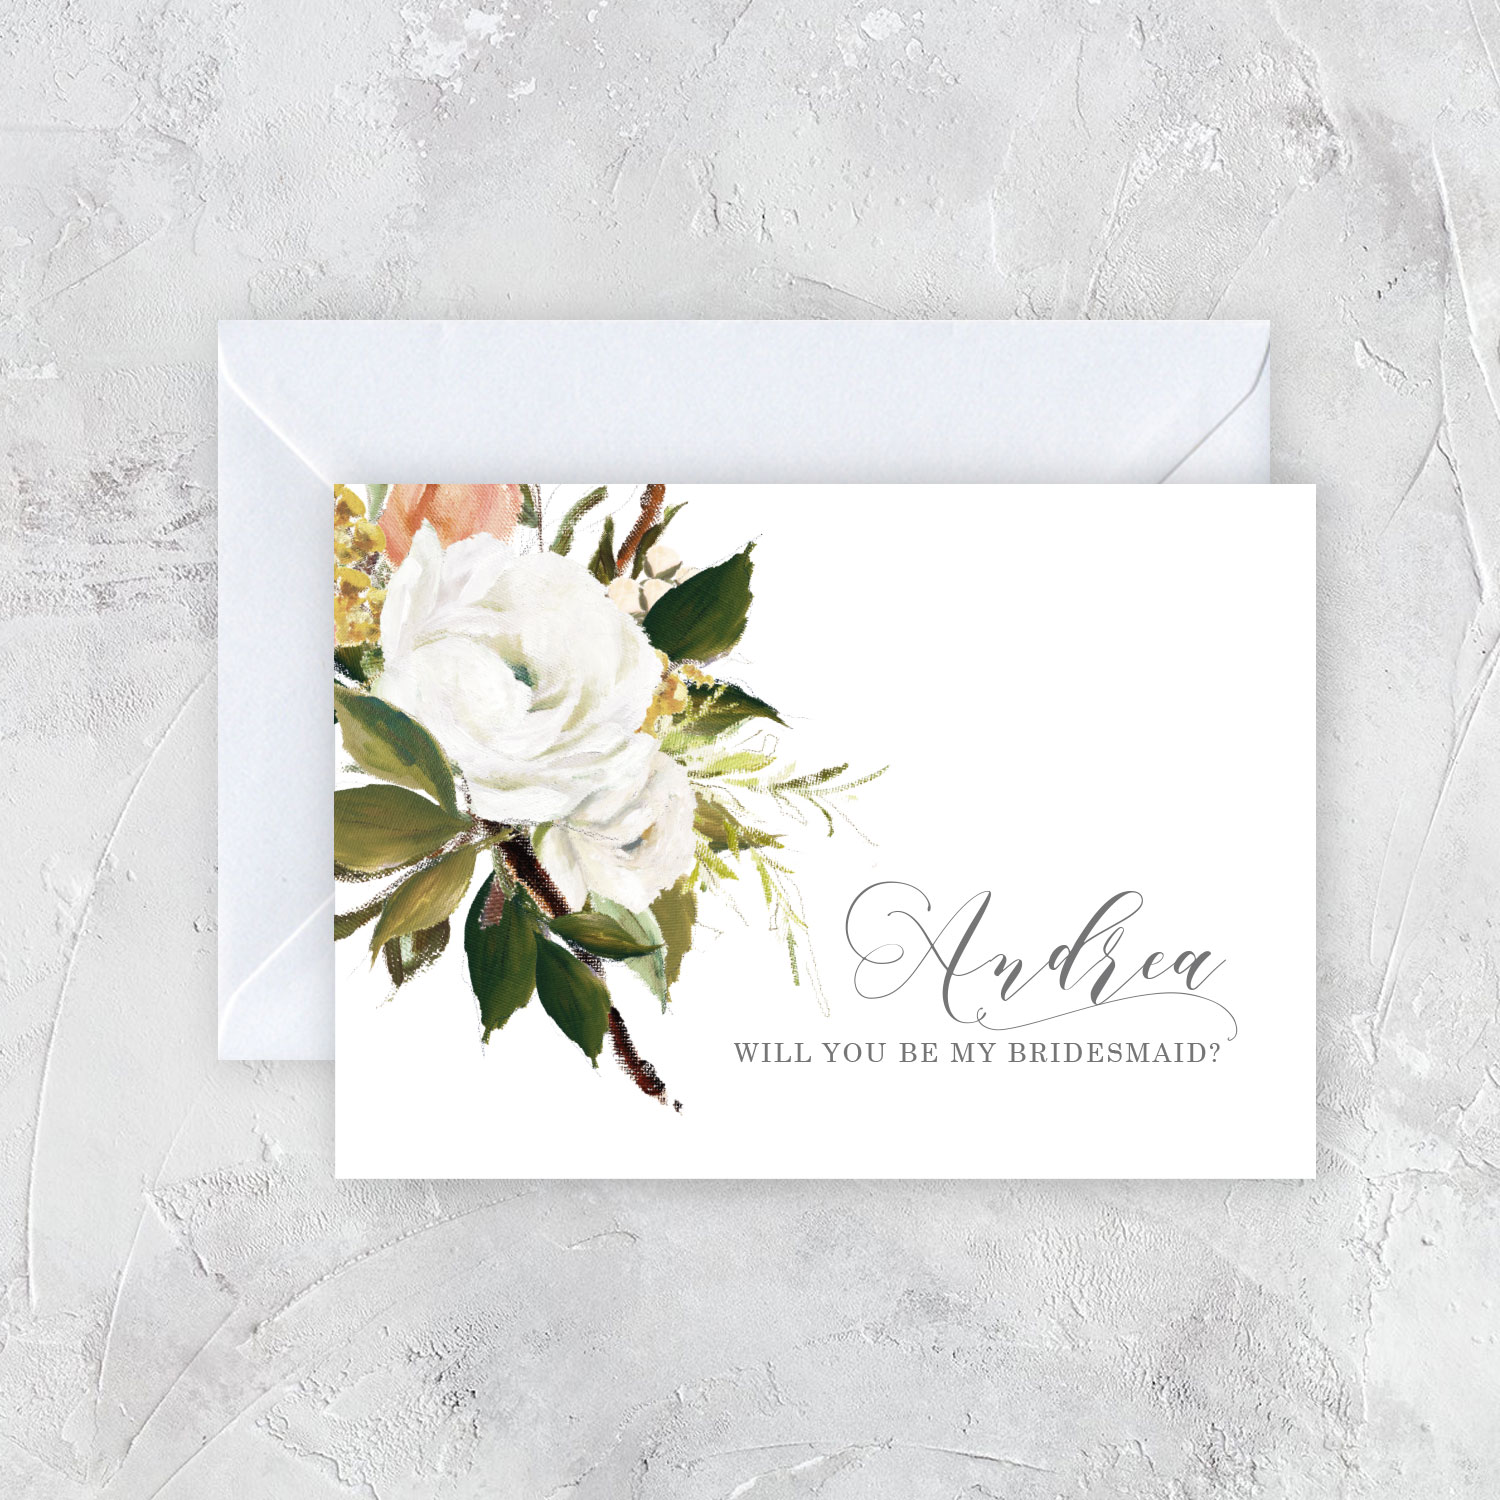 watercolour-bridesmaid-proposal-card-wedding-invitations-and-wedding-stationery-ireland-save